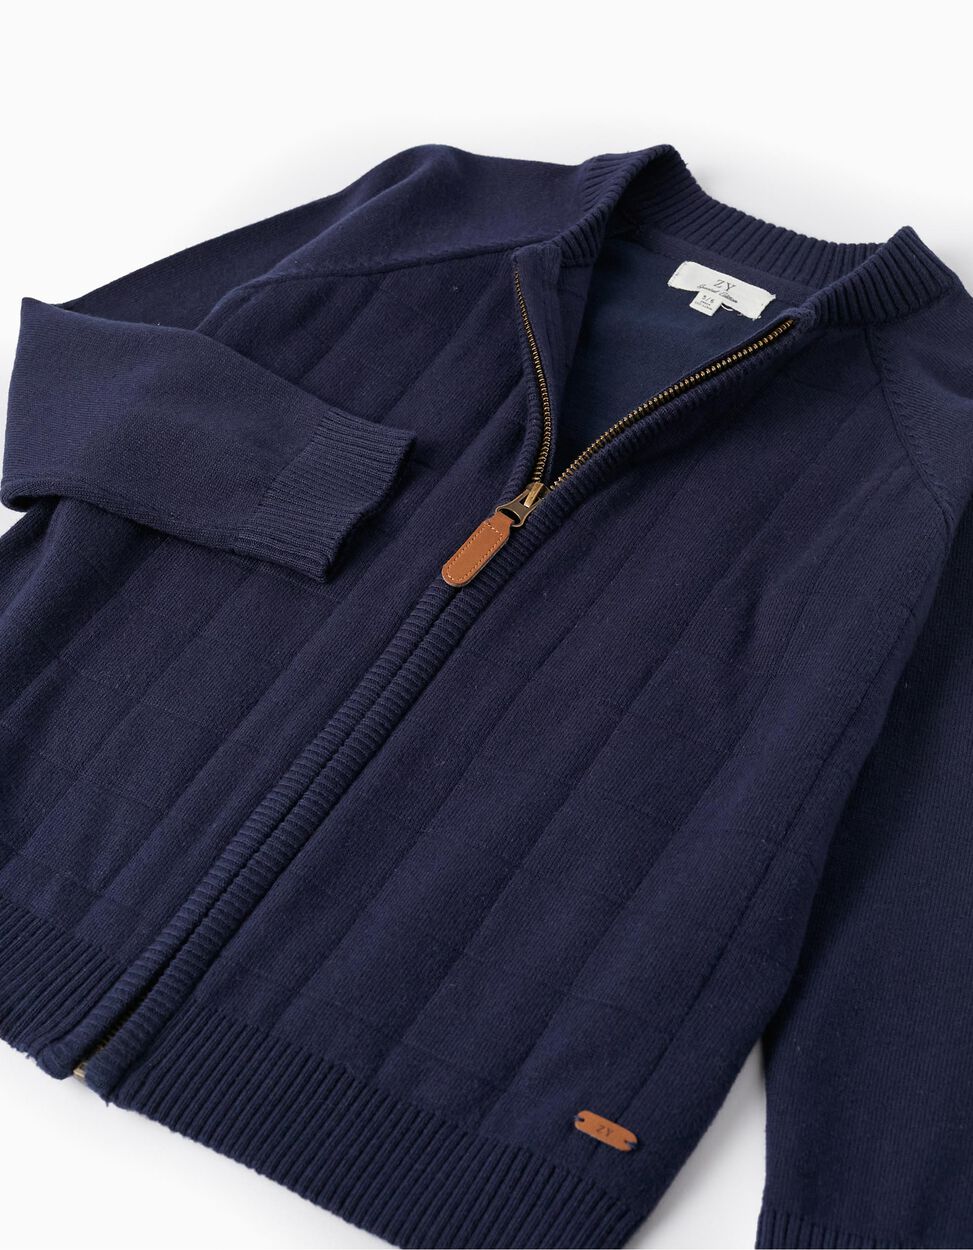 Buy Online Knitted Cardigan for Boys, Dark Blue